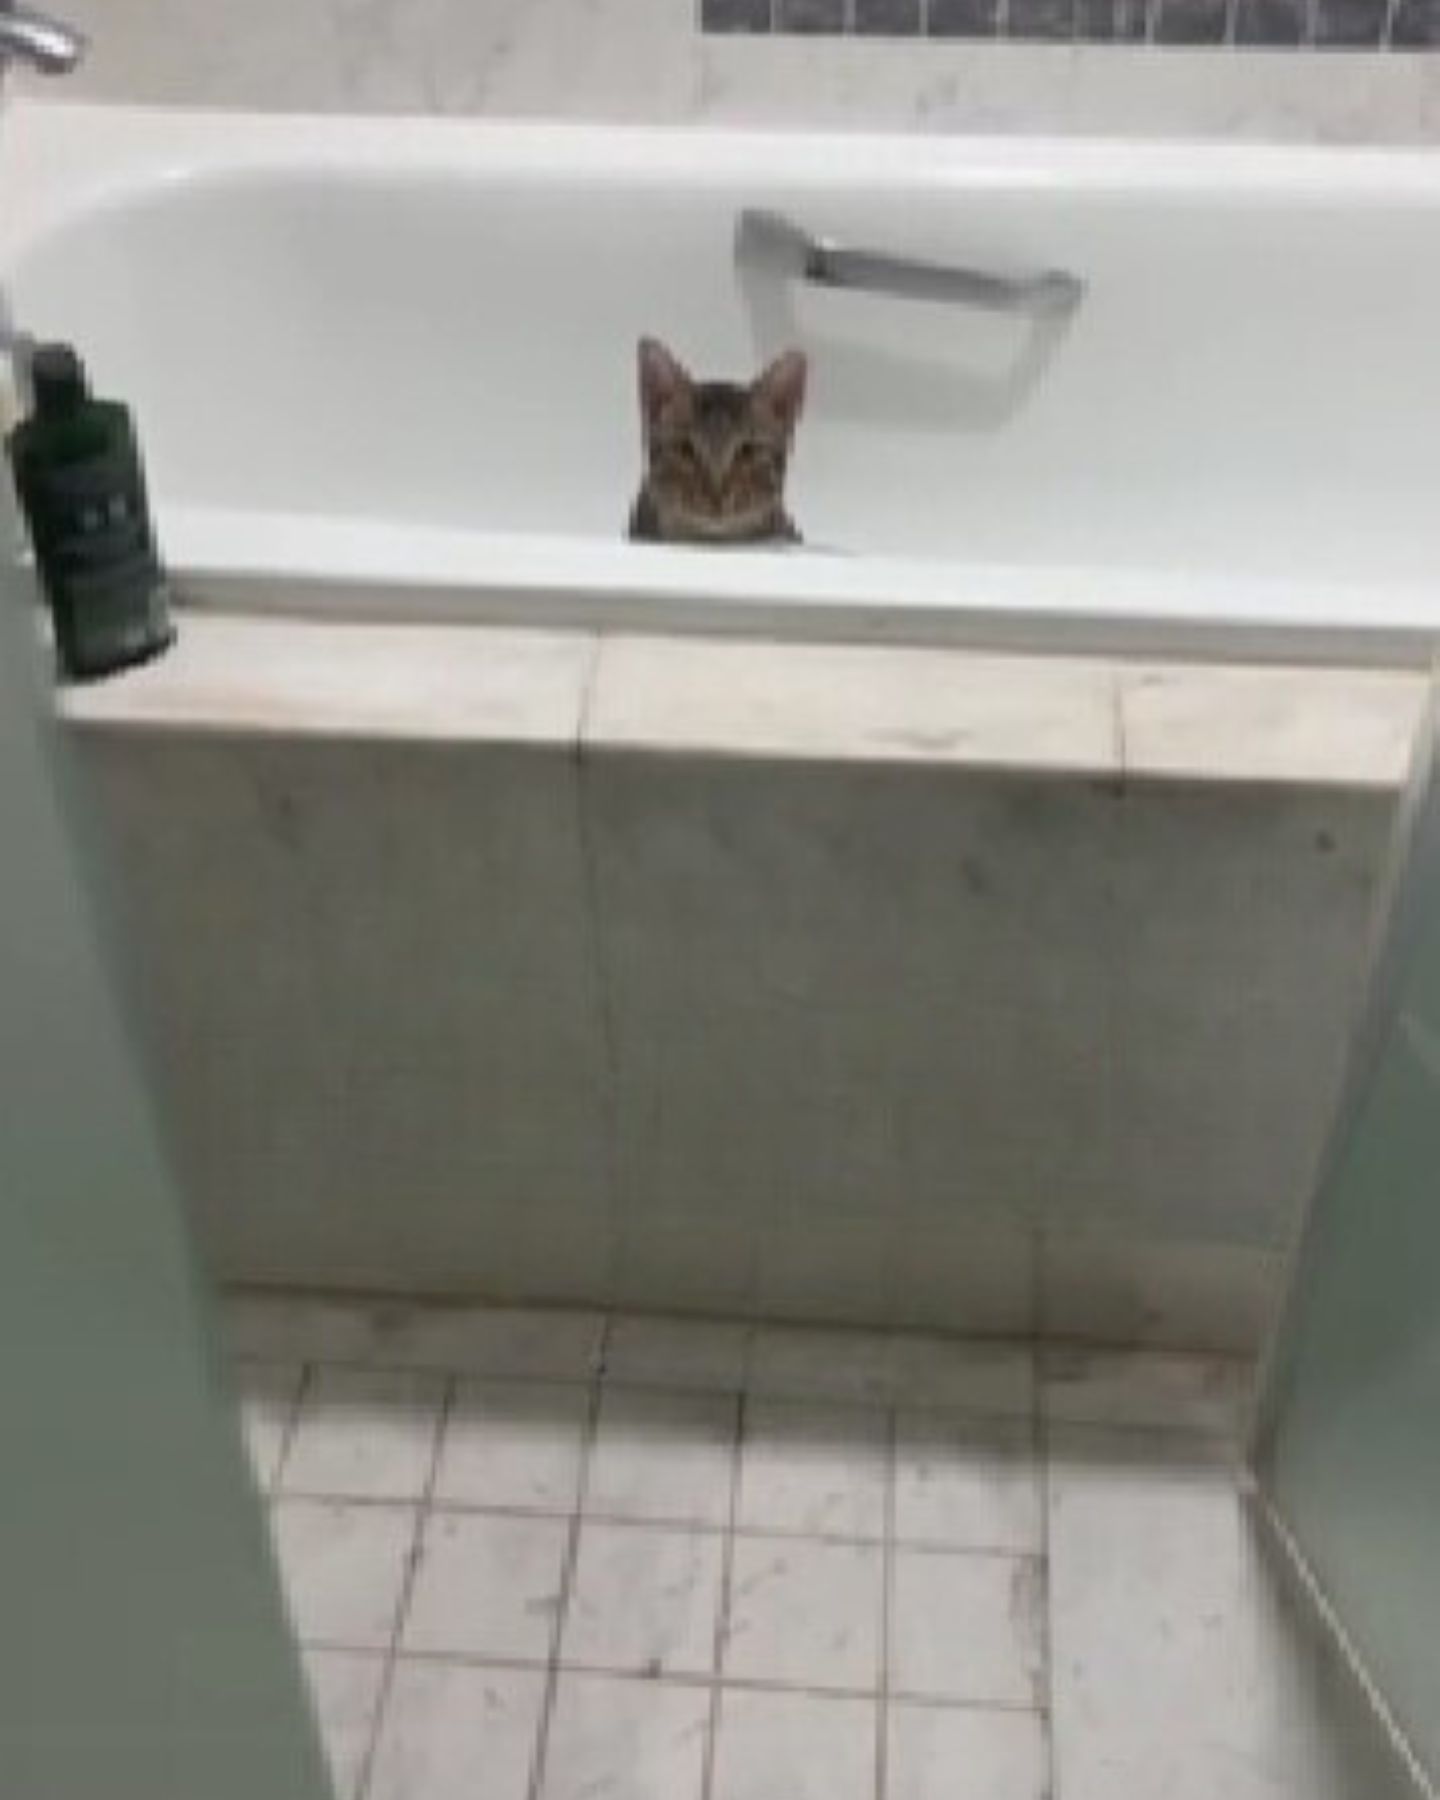 photo of cat in a bathtub